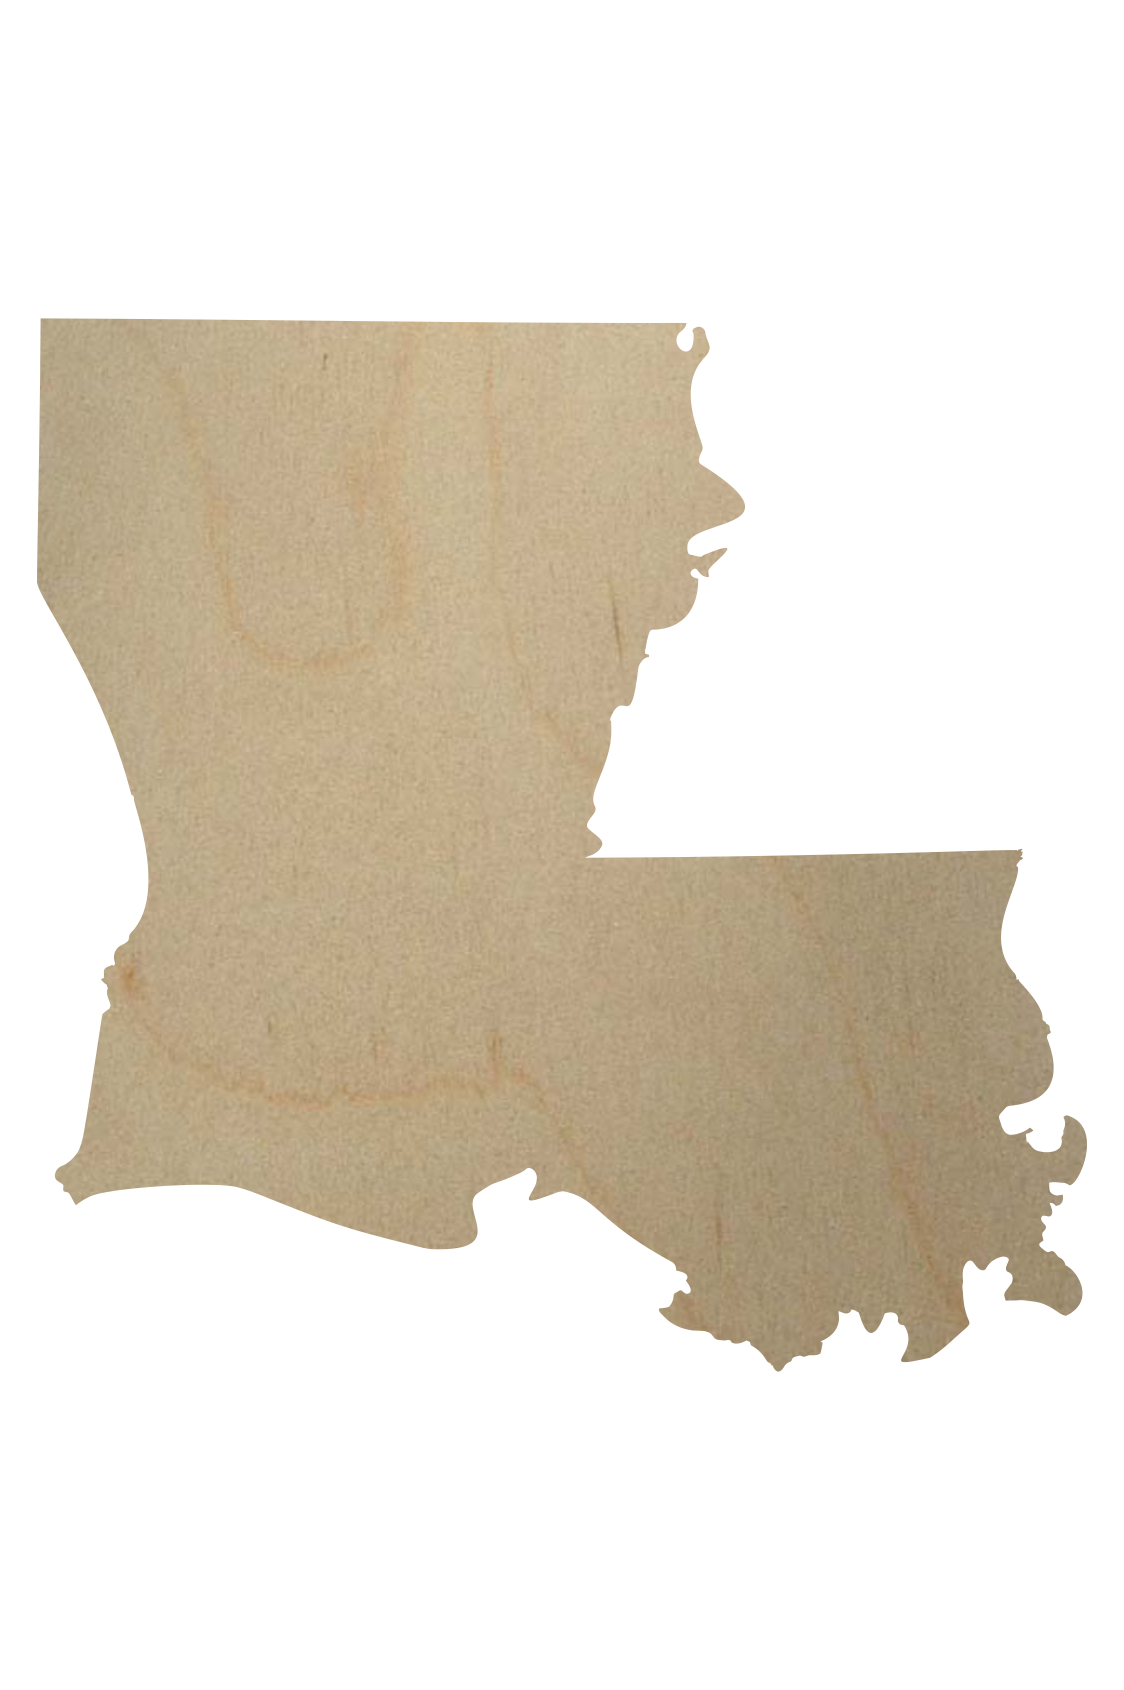 Louisiana wooden cutout.